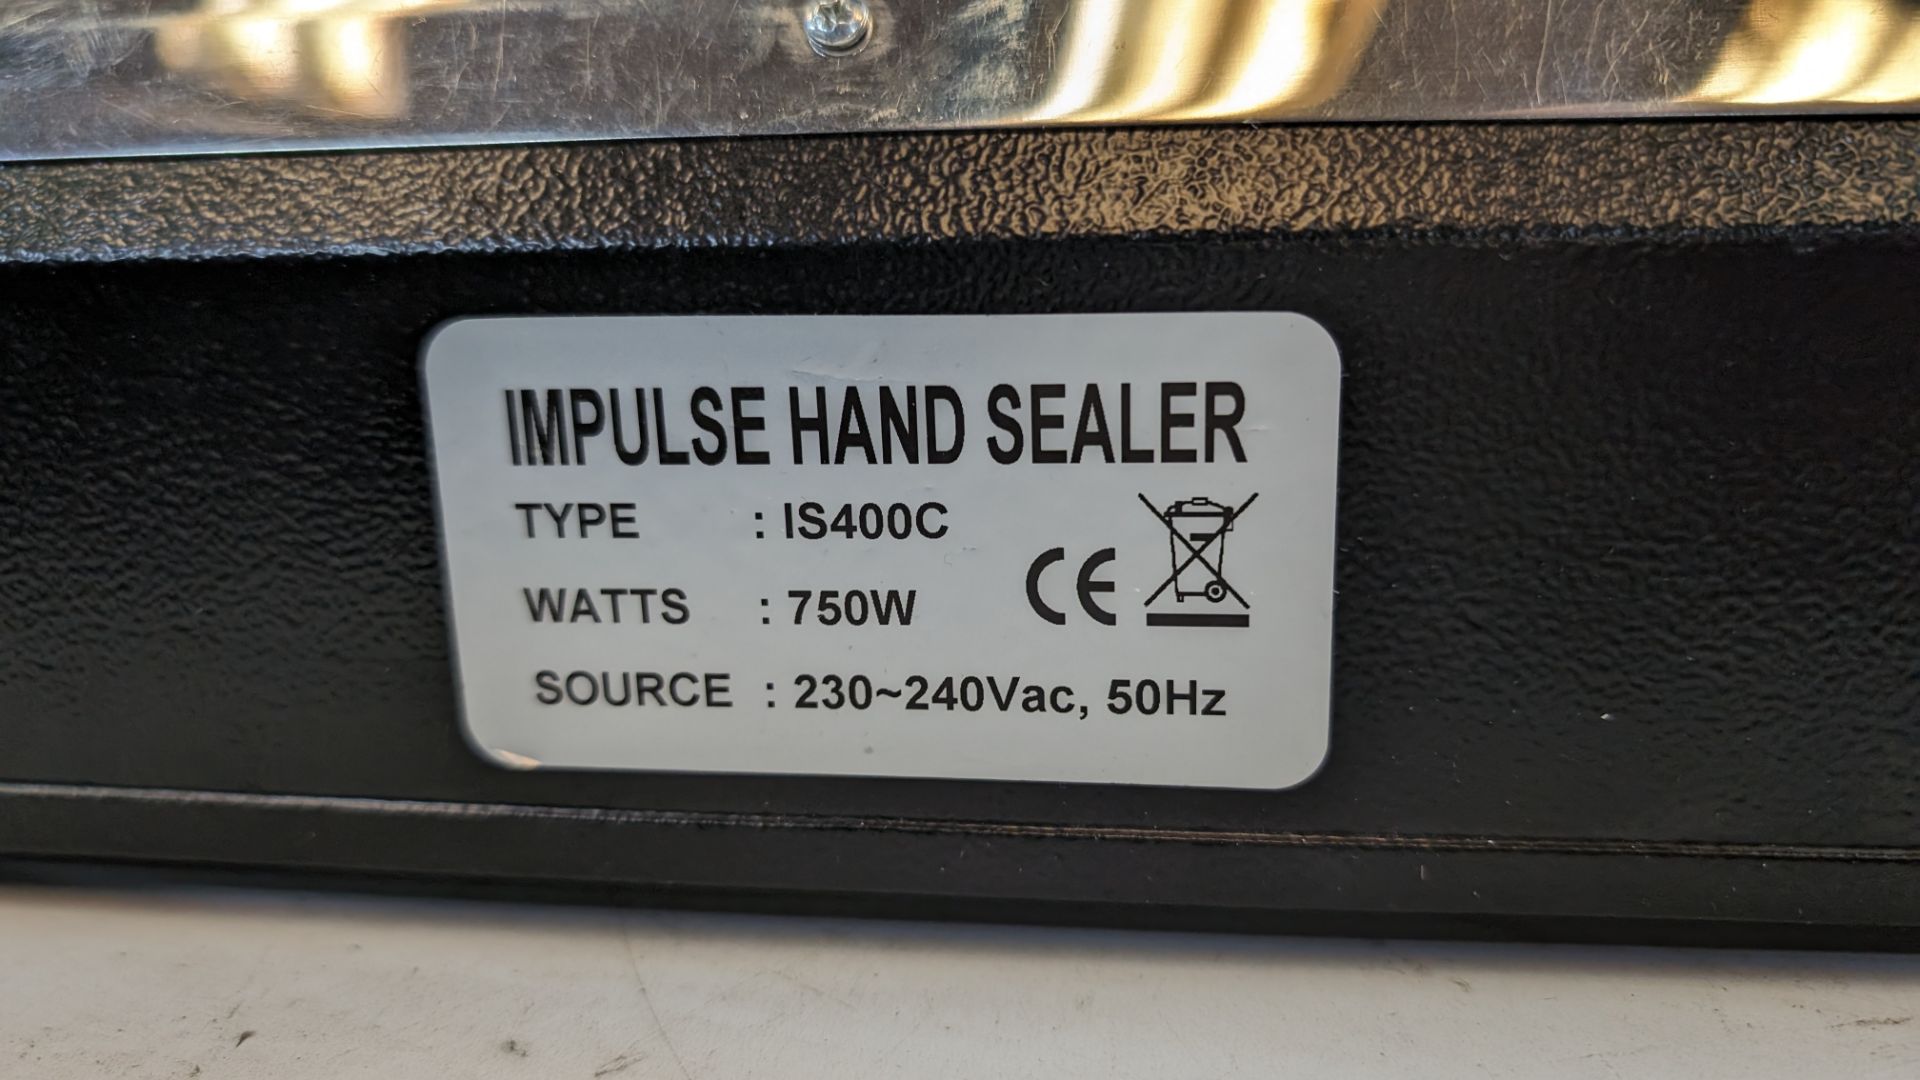 Impulse sealer model IS400C - Image 7 of 9